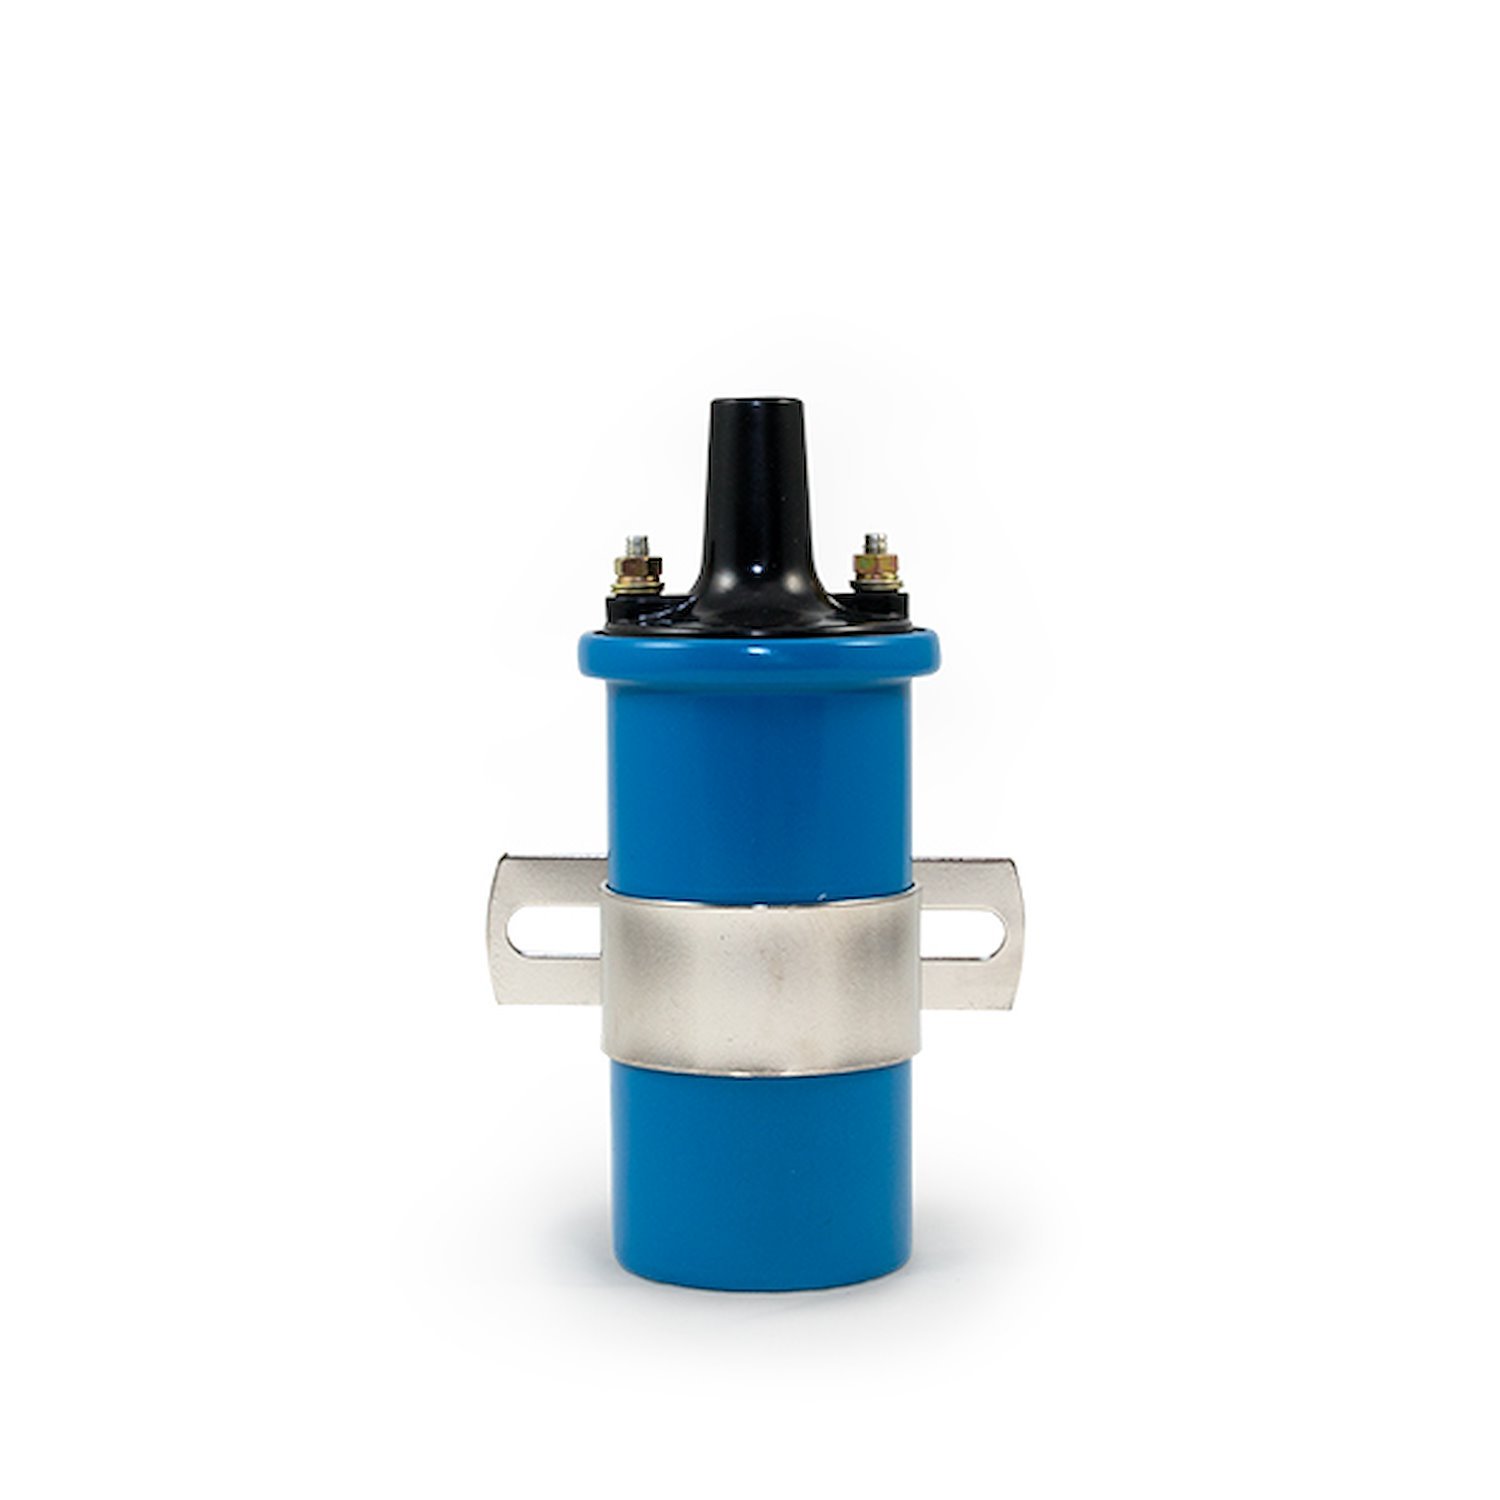 JM6927BL Ignition Coil, Oil-Filled Canister Style, Female Socket, Blue